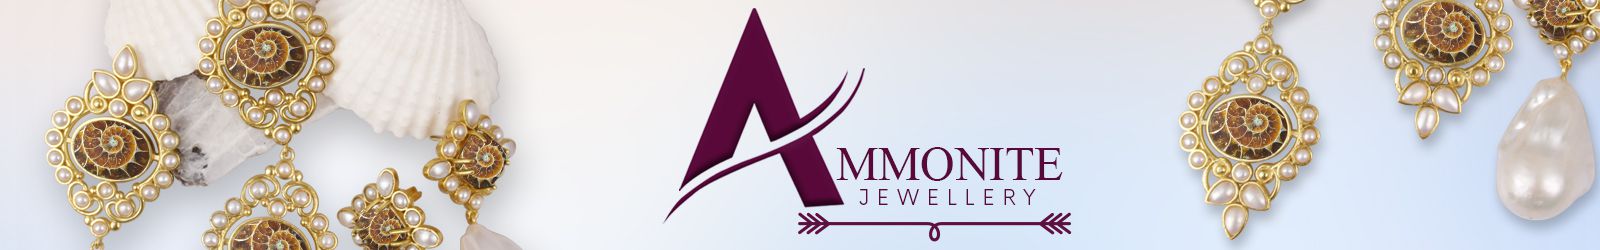 Silver Ammonite Jewelry Wholesale Supplier